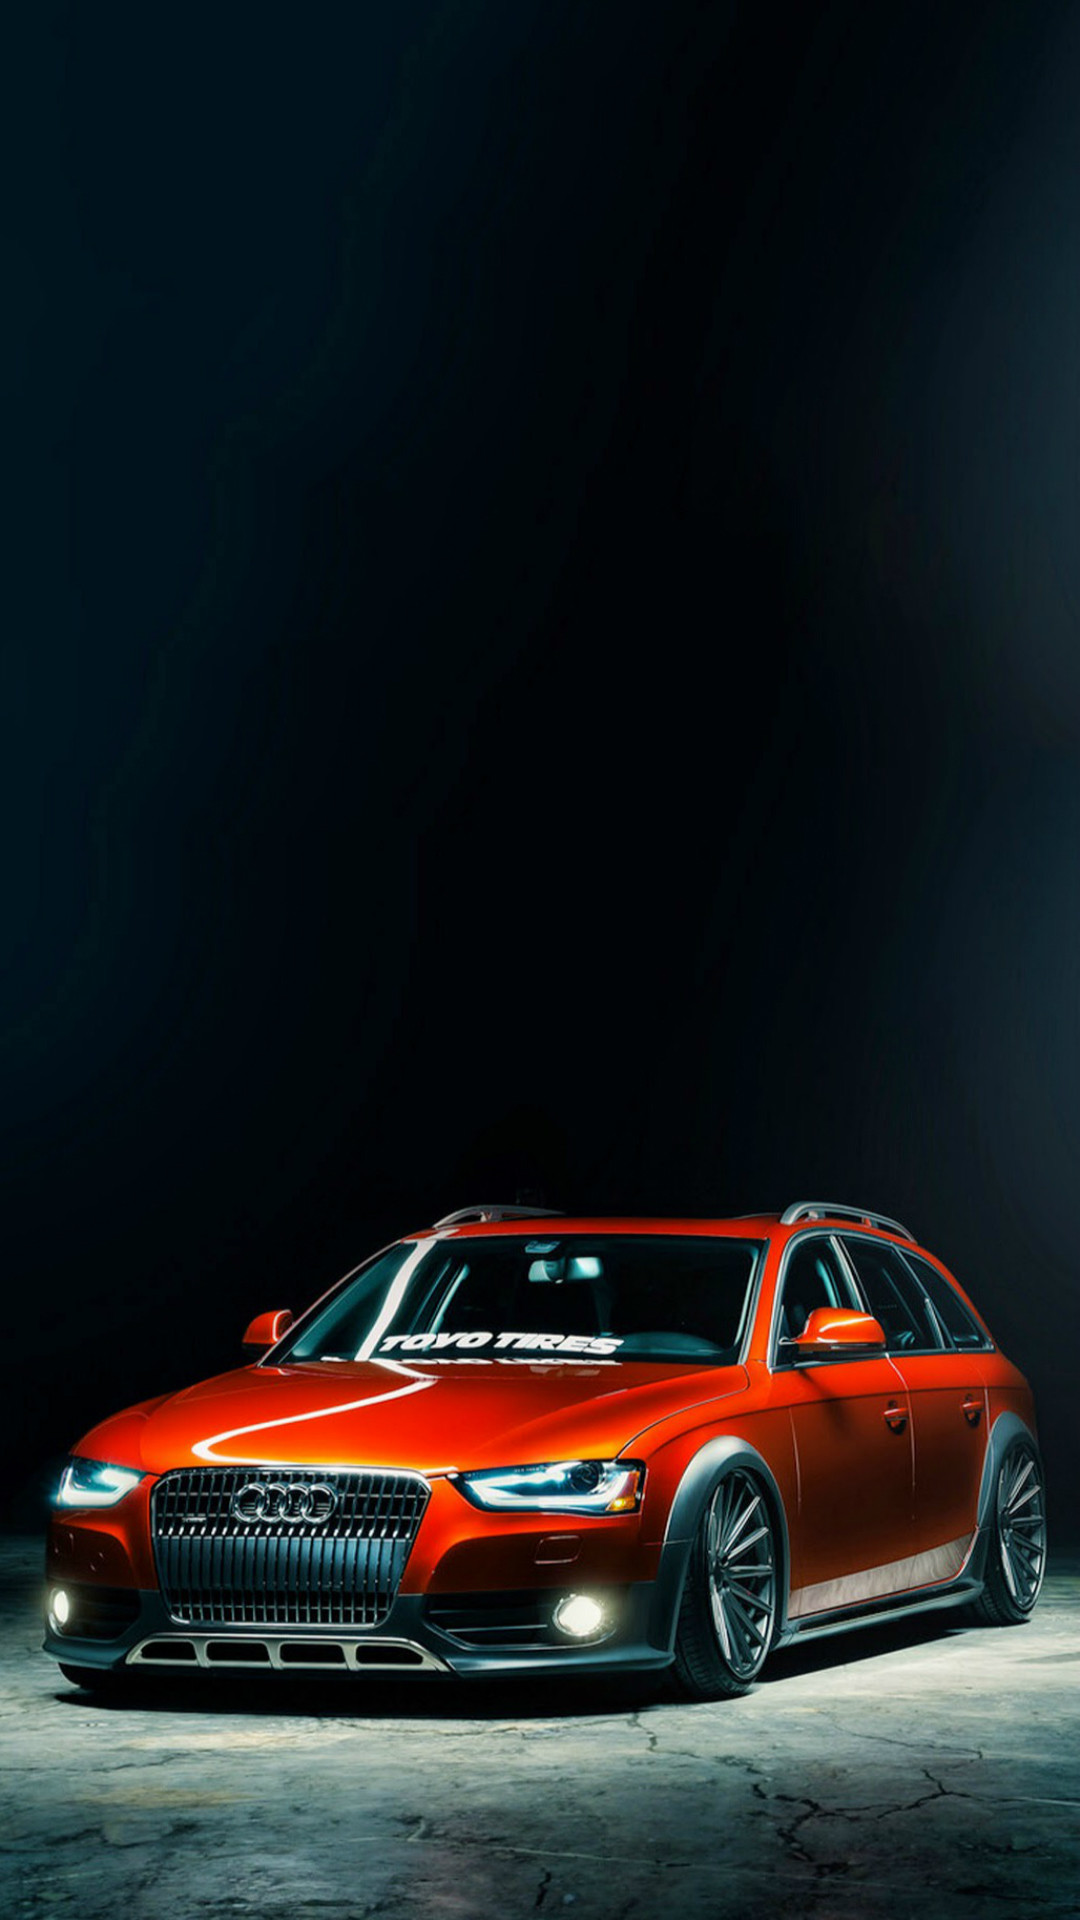 1080x1920 ... Audi R8 Dark Concept Car iPhone 6 Wallpaper Download iPhone .